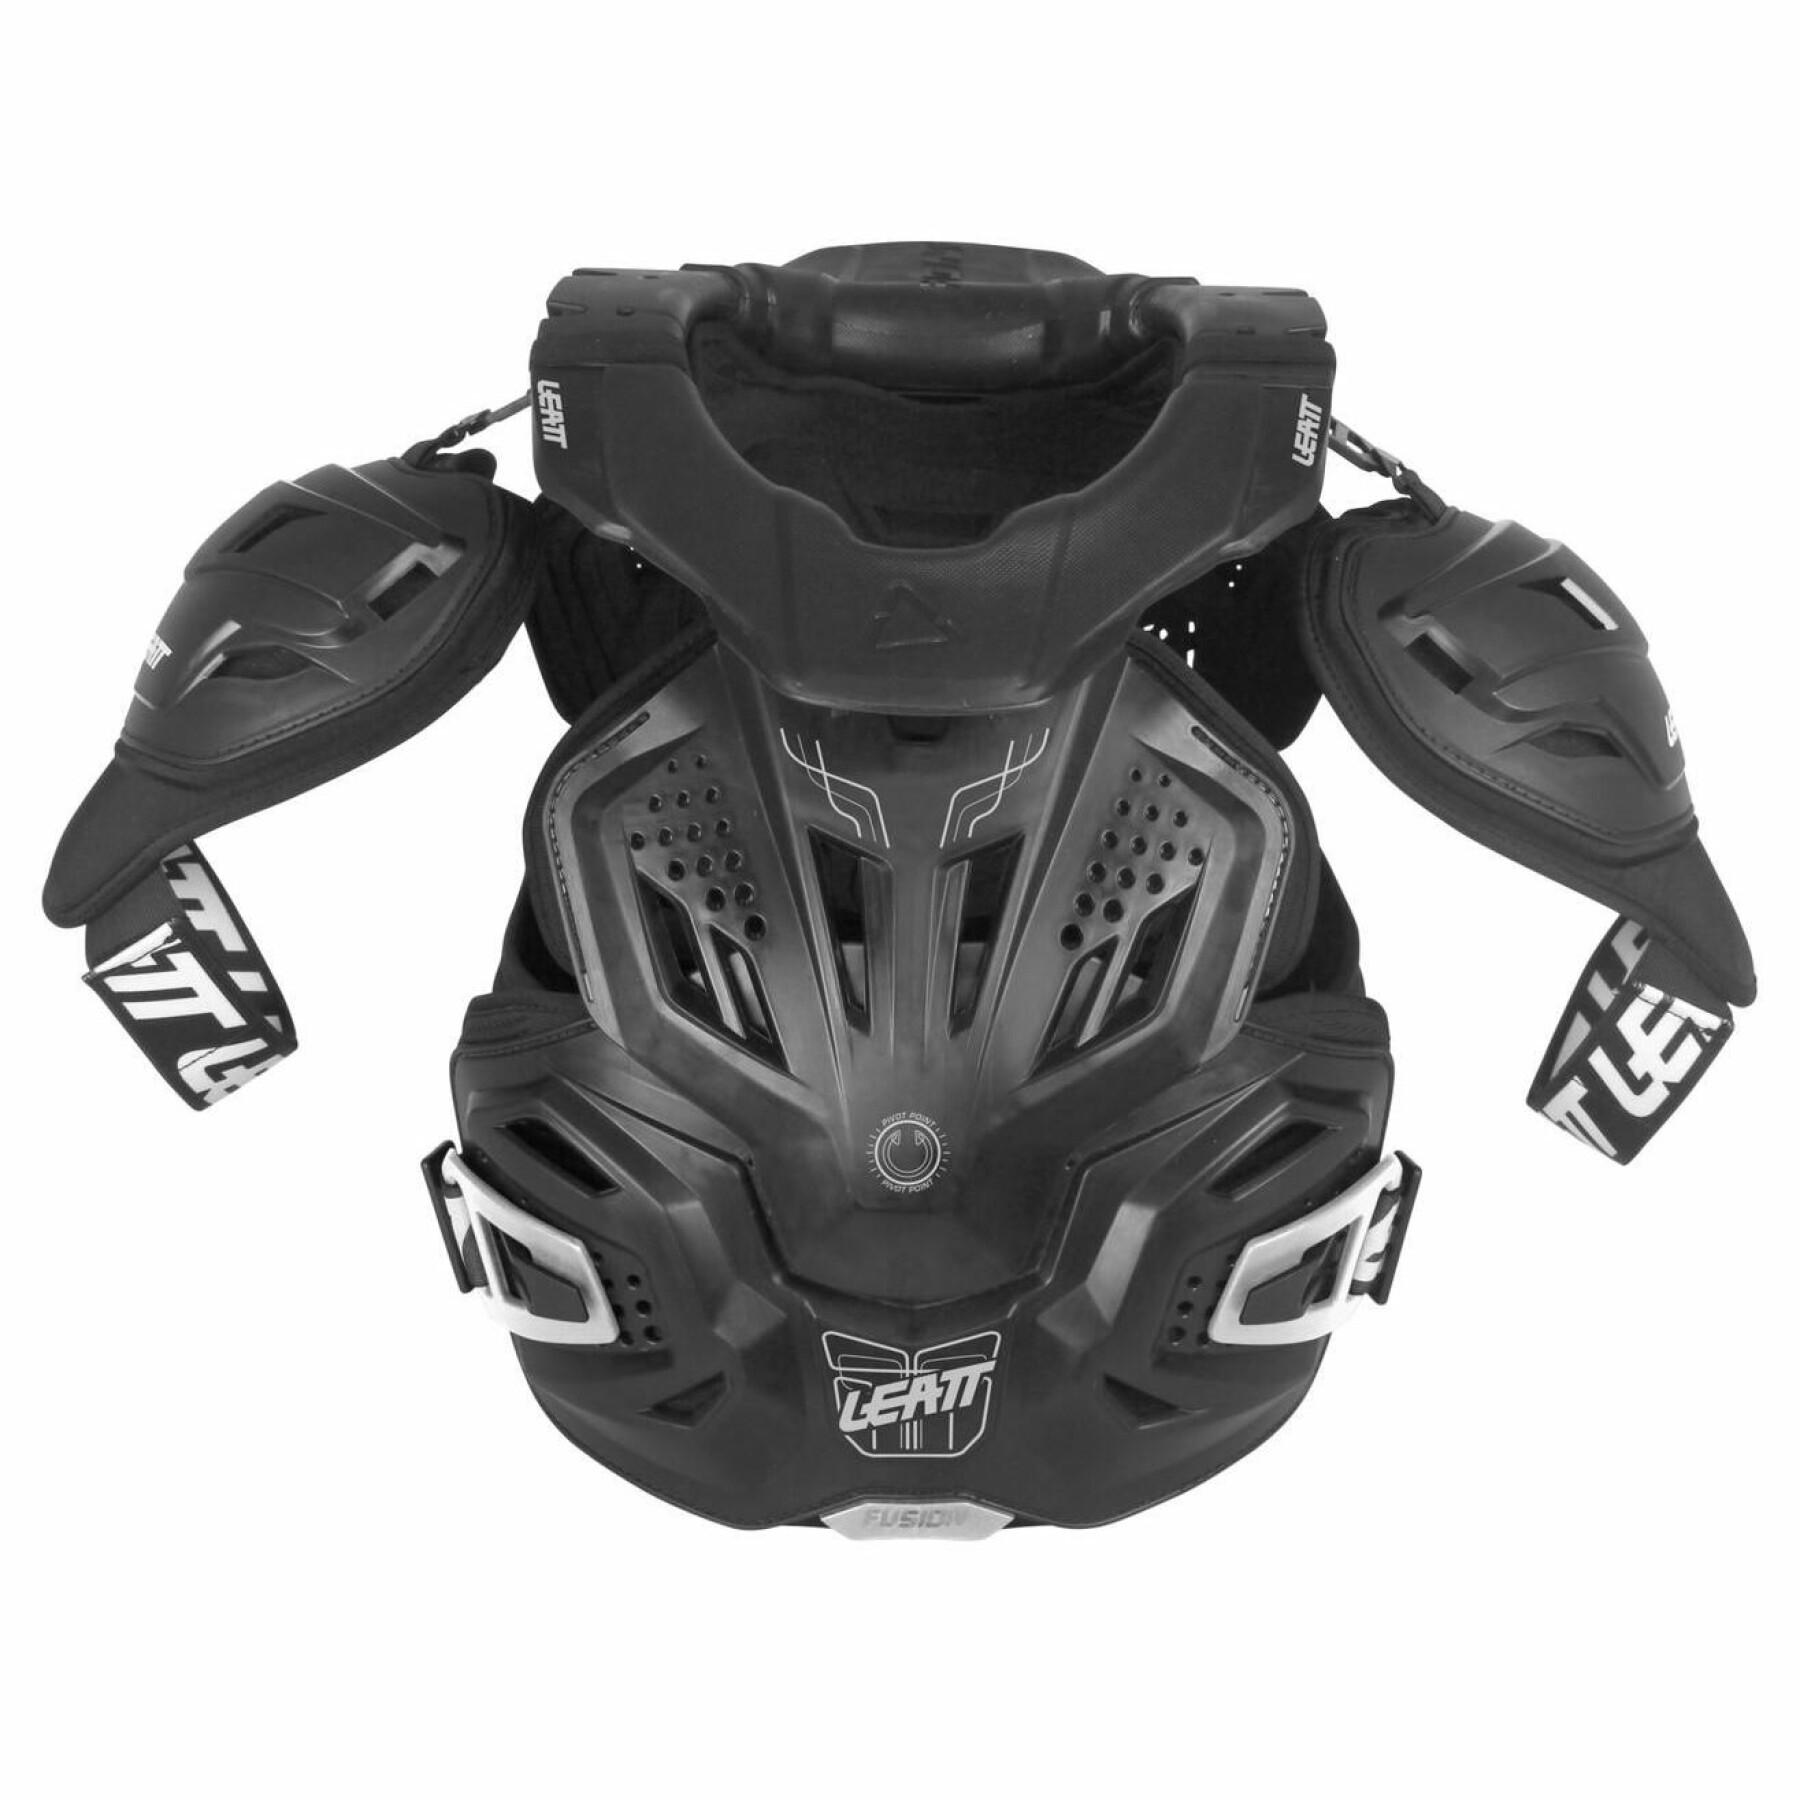 Placa frontal de moto Leatt 3.0